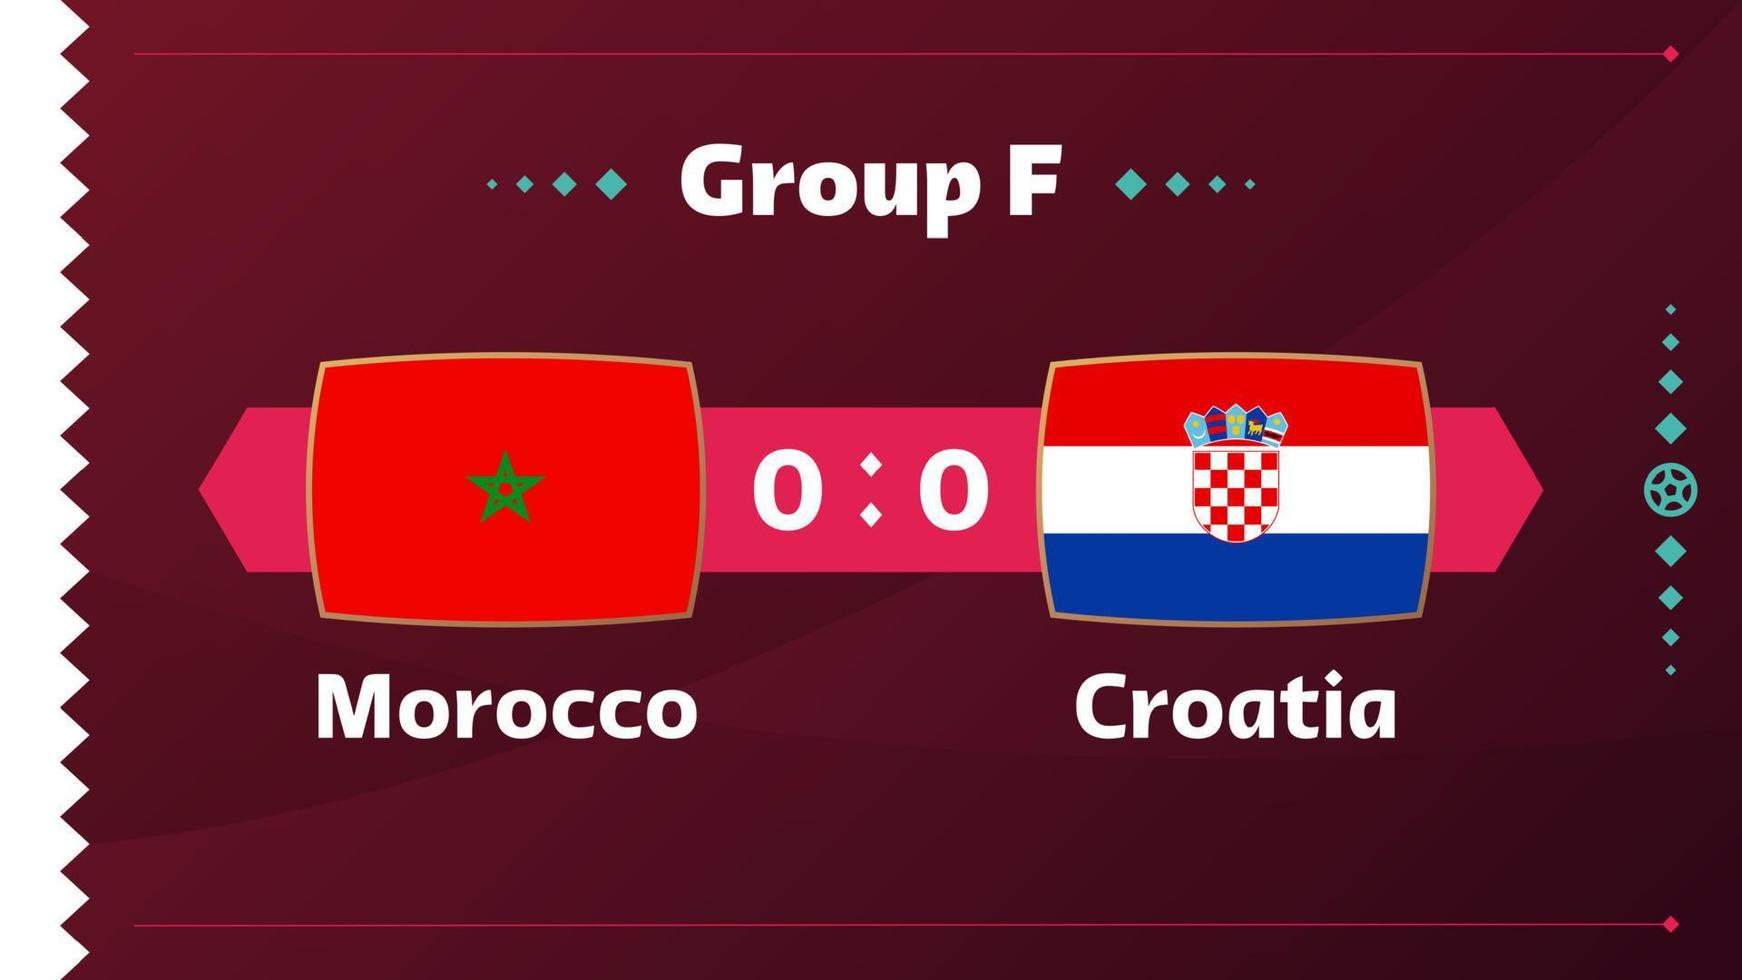 Morocco vs Croatia, Football 2022, Group F. World Football Competition championship match versus teams intro sport background, championship competition final poster, vector illustration.